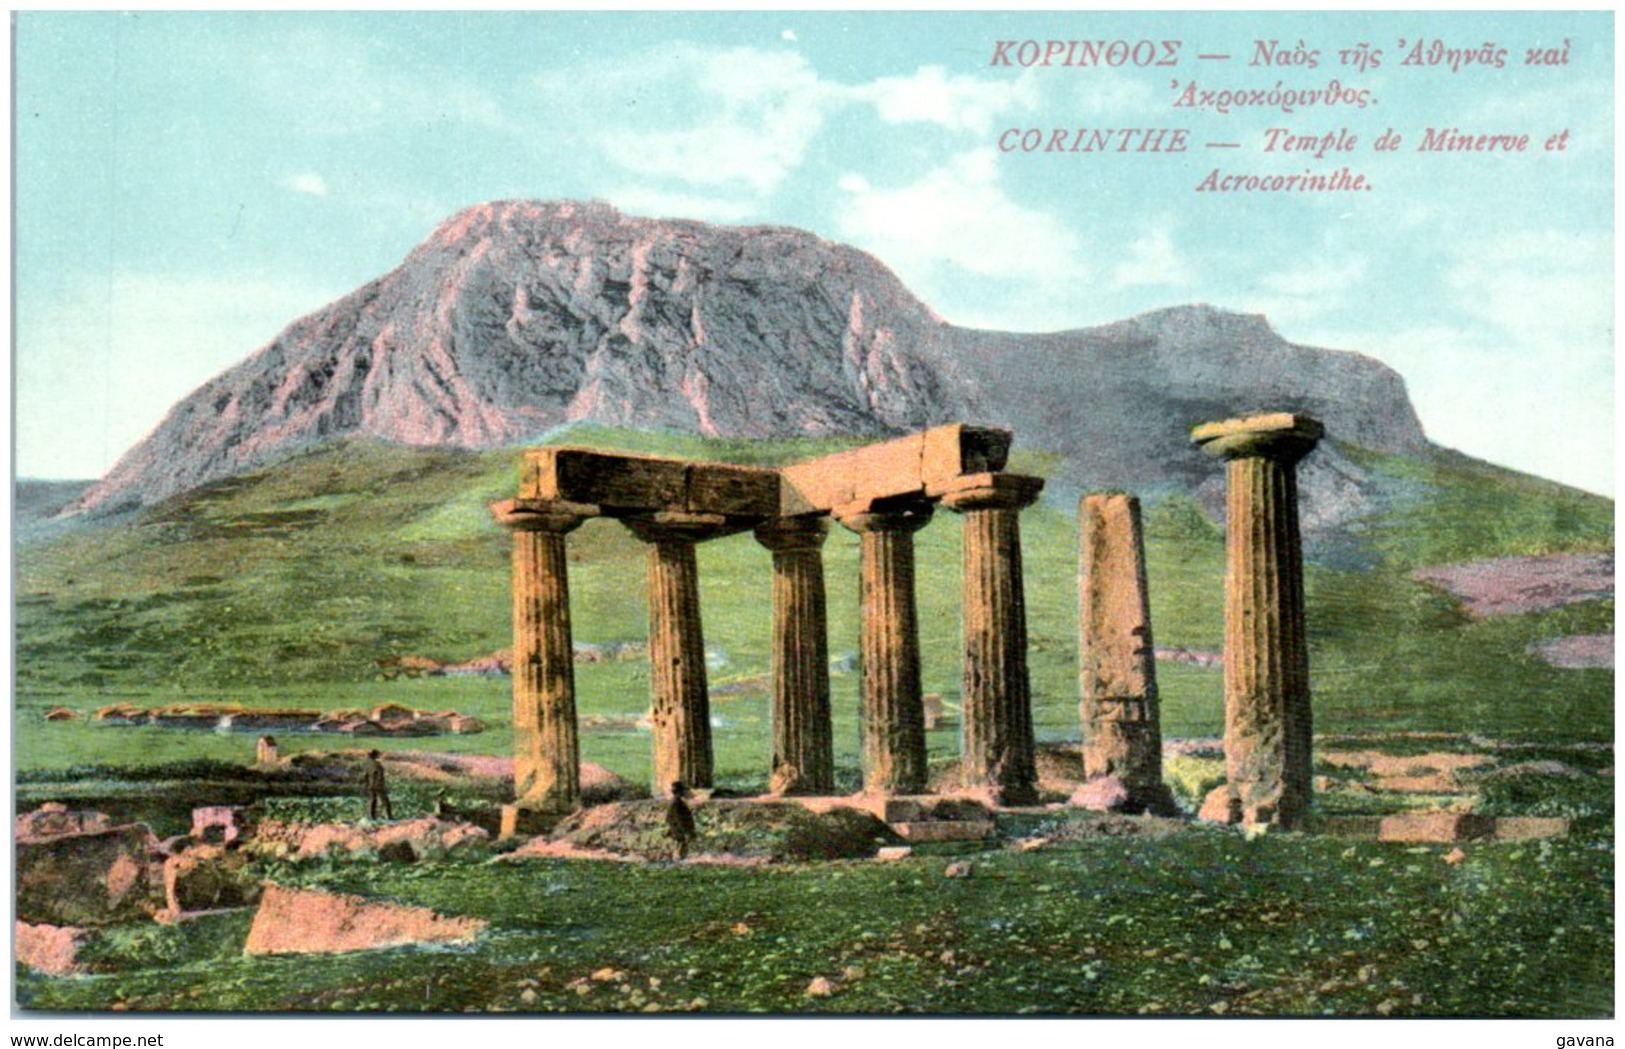 CORINTHE - Temple De Minerve Et Acrocorinthe - Griekenland